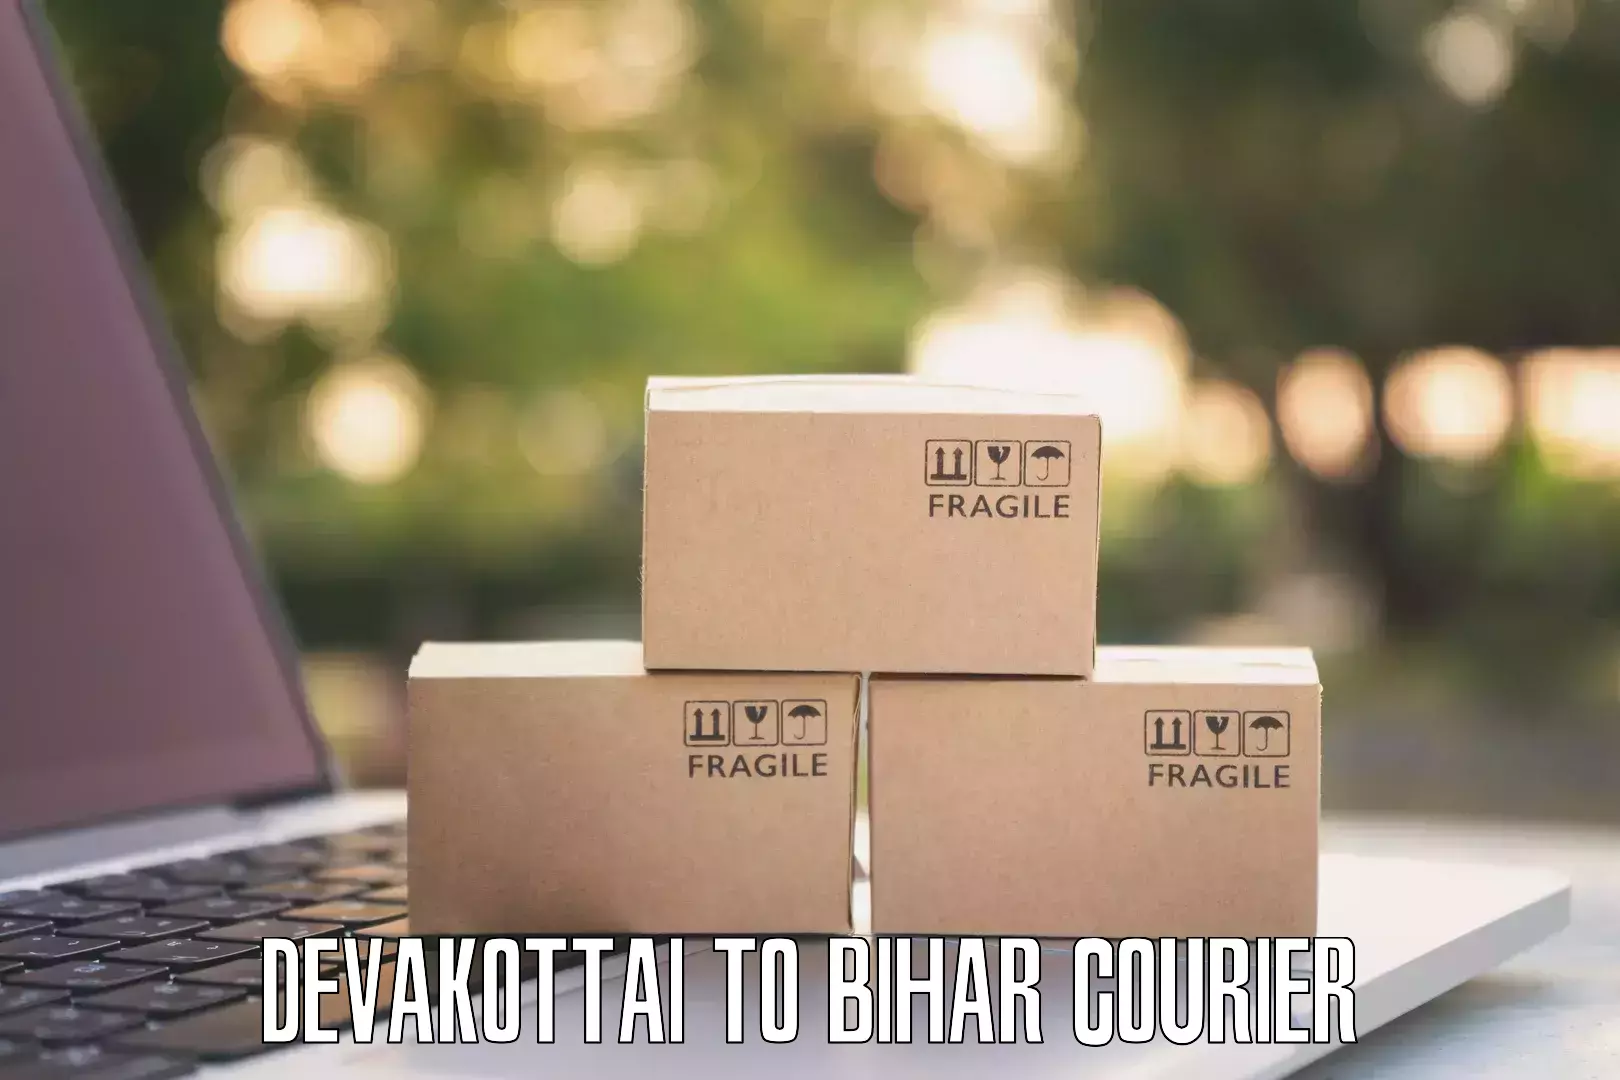 Enhanced tracking features Devakottai to Aurai